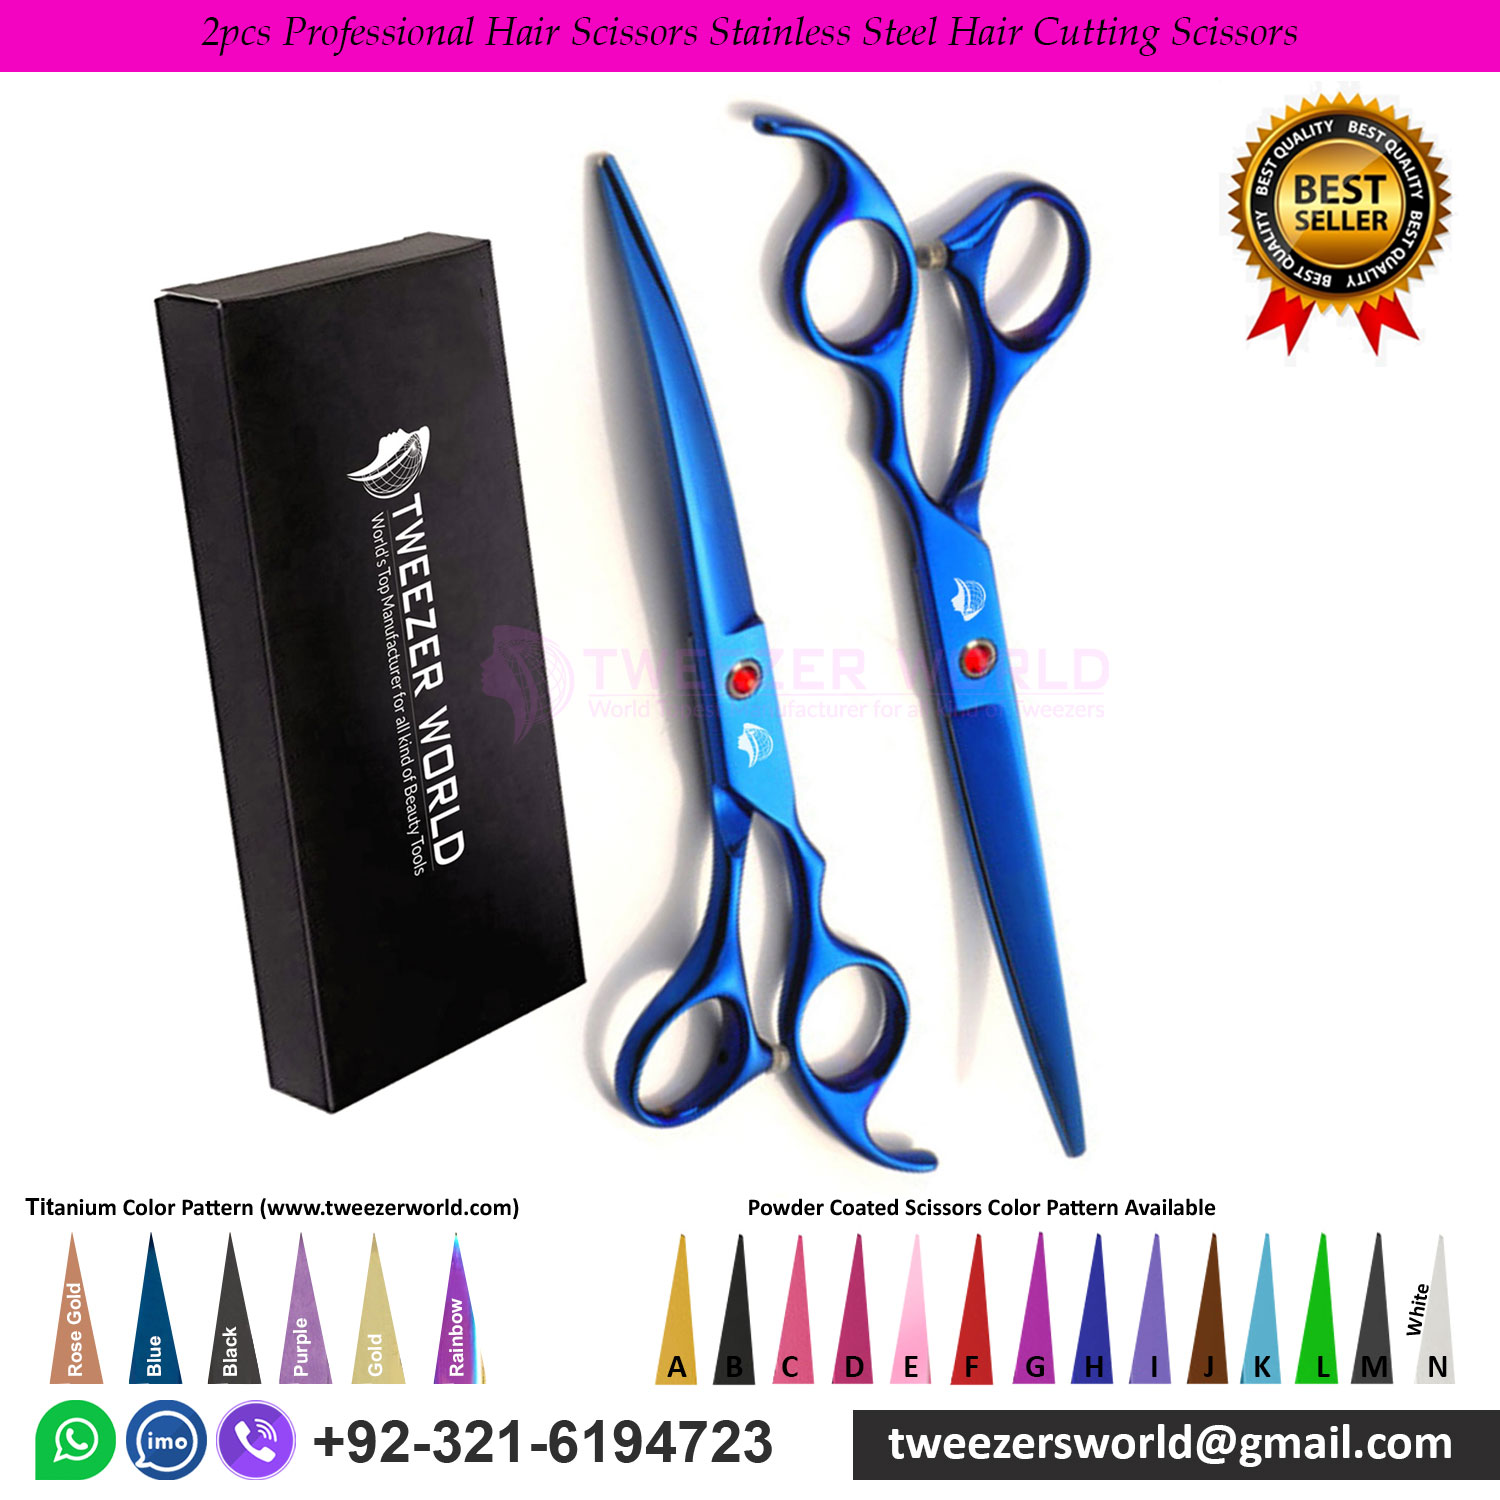 2pcs Professional Hair Scissors Stainless Steel Hair Cutting Scissors set